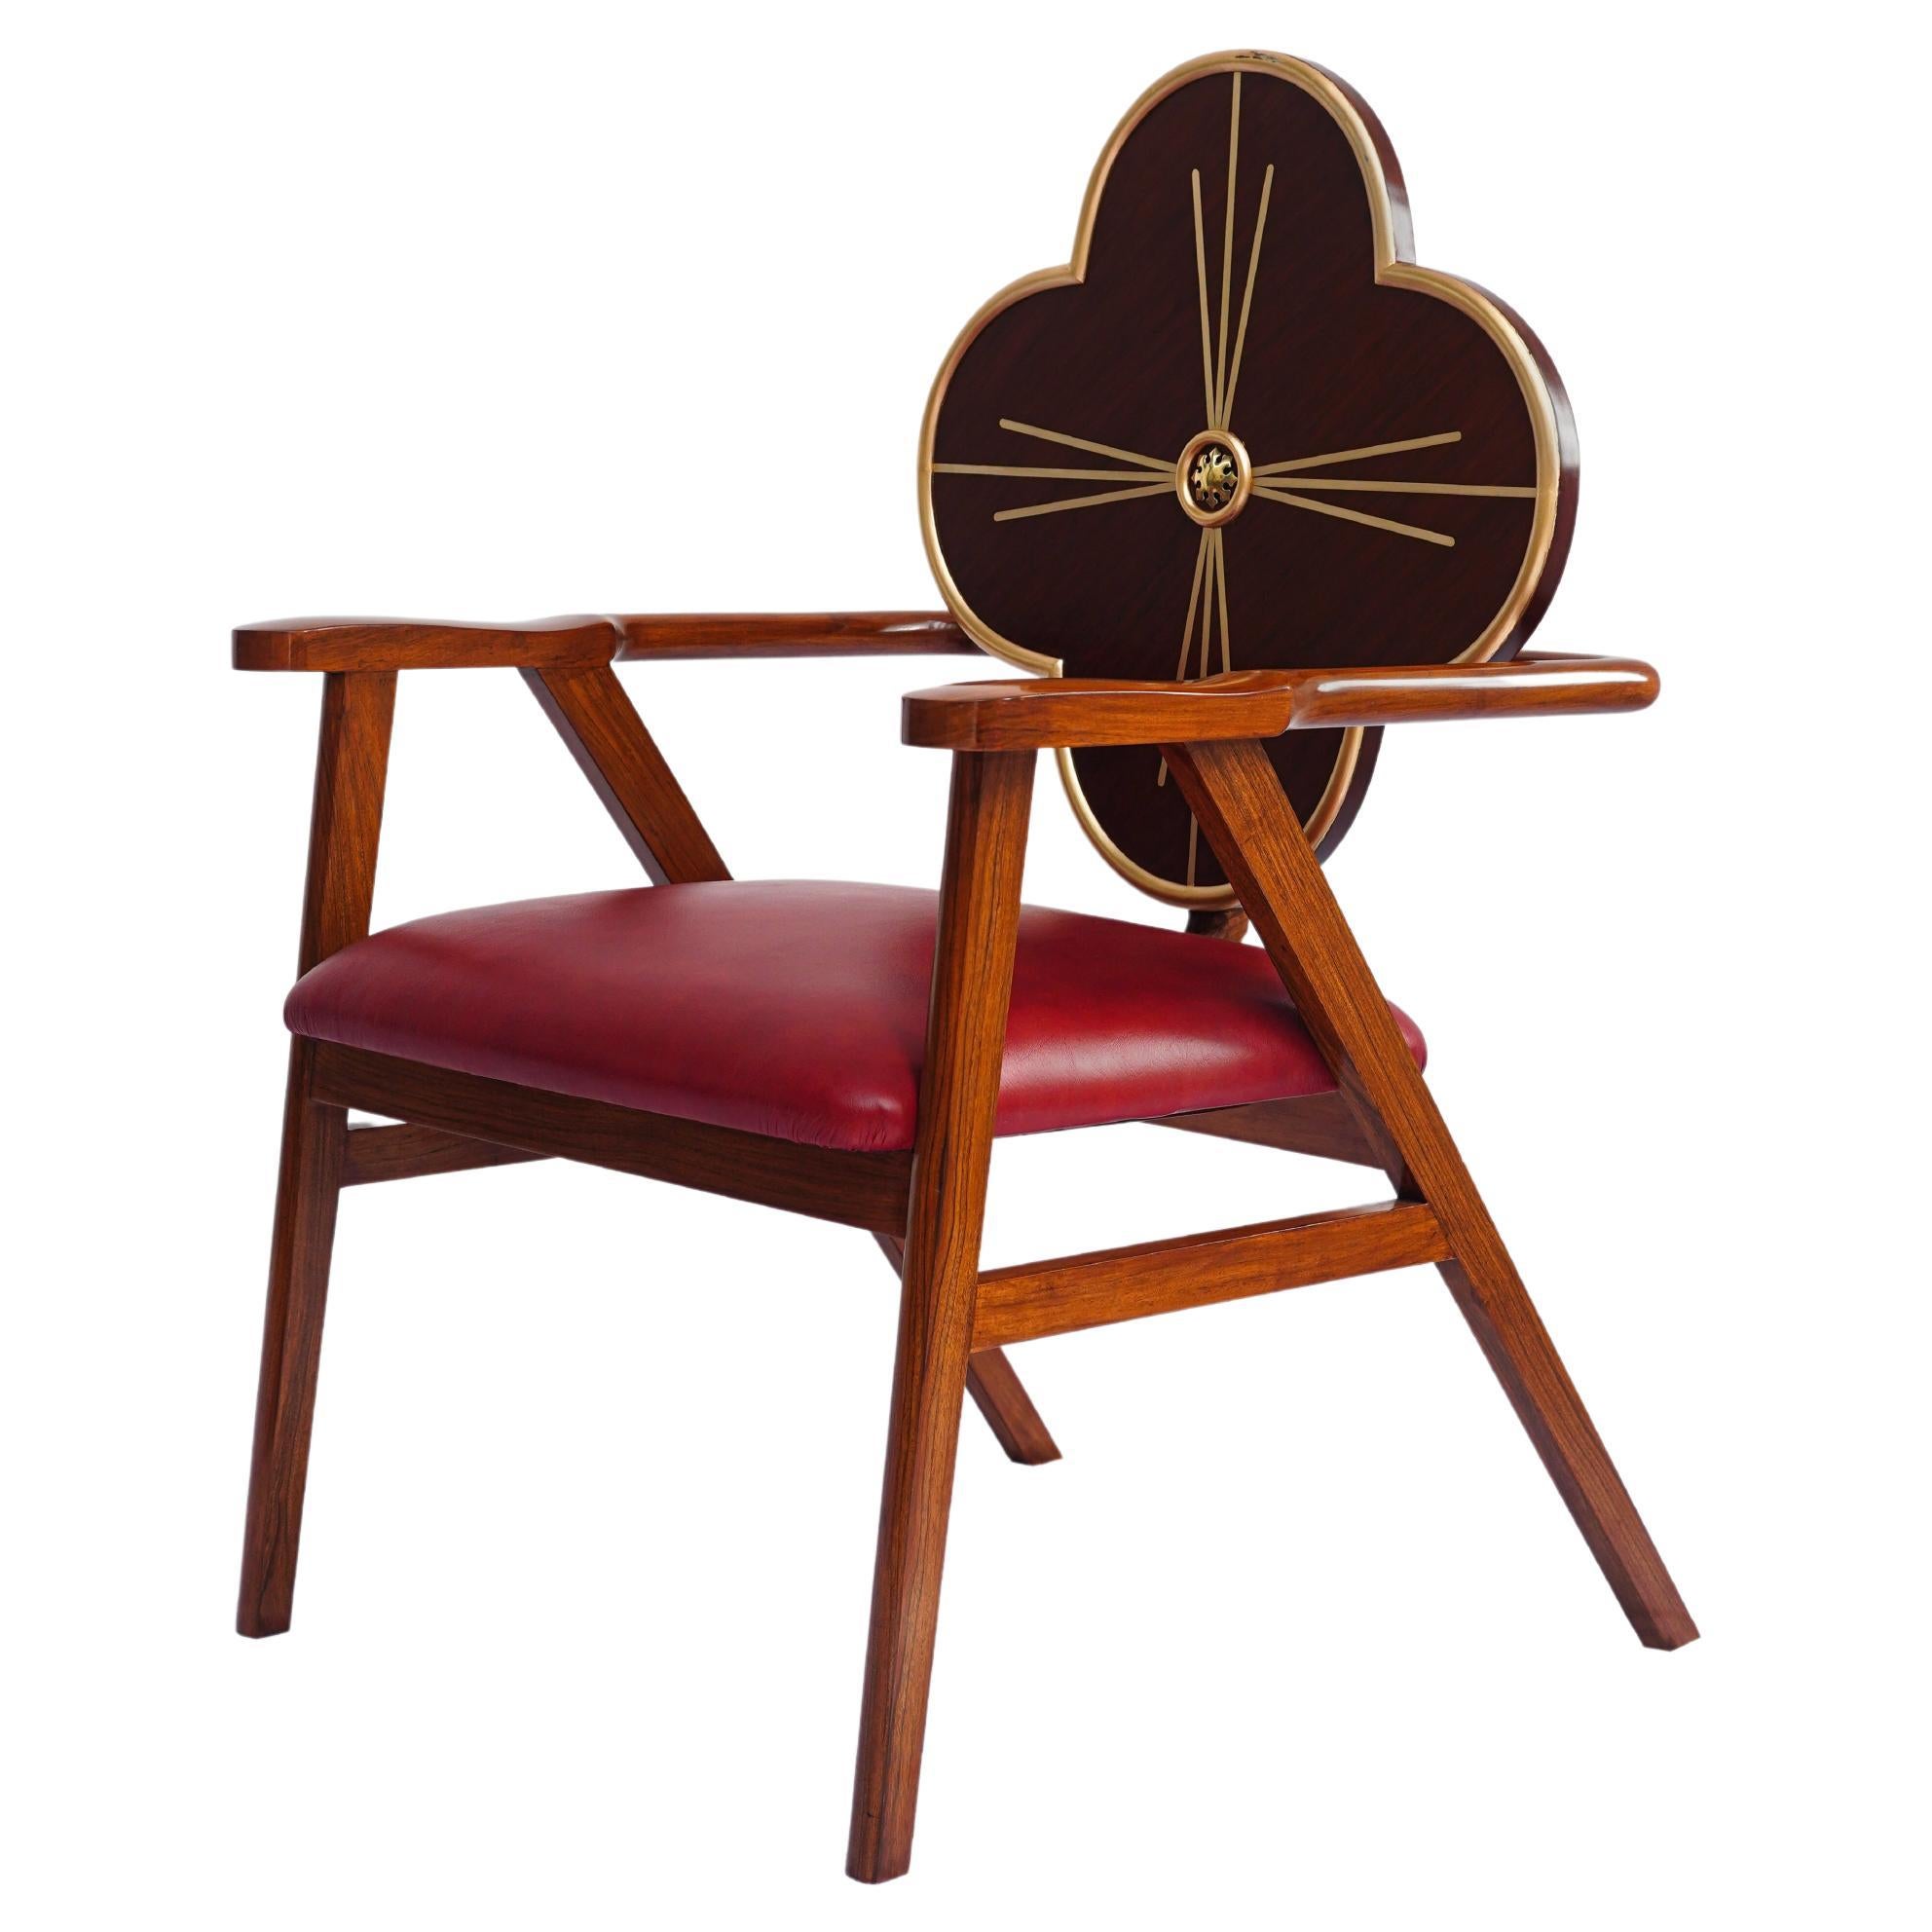 Original Art Nouveau, bold, One of a Kind, Lounge Chair, Walnut, Leather, Unique For Sale